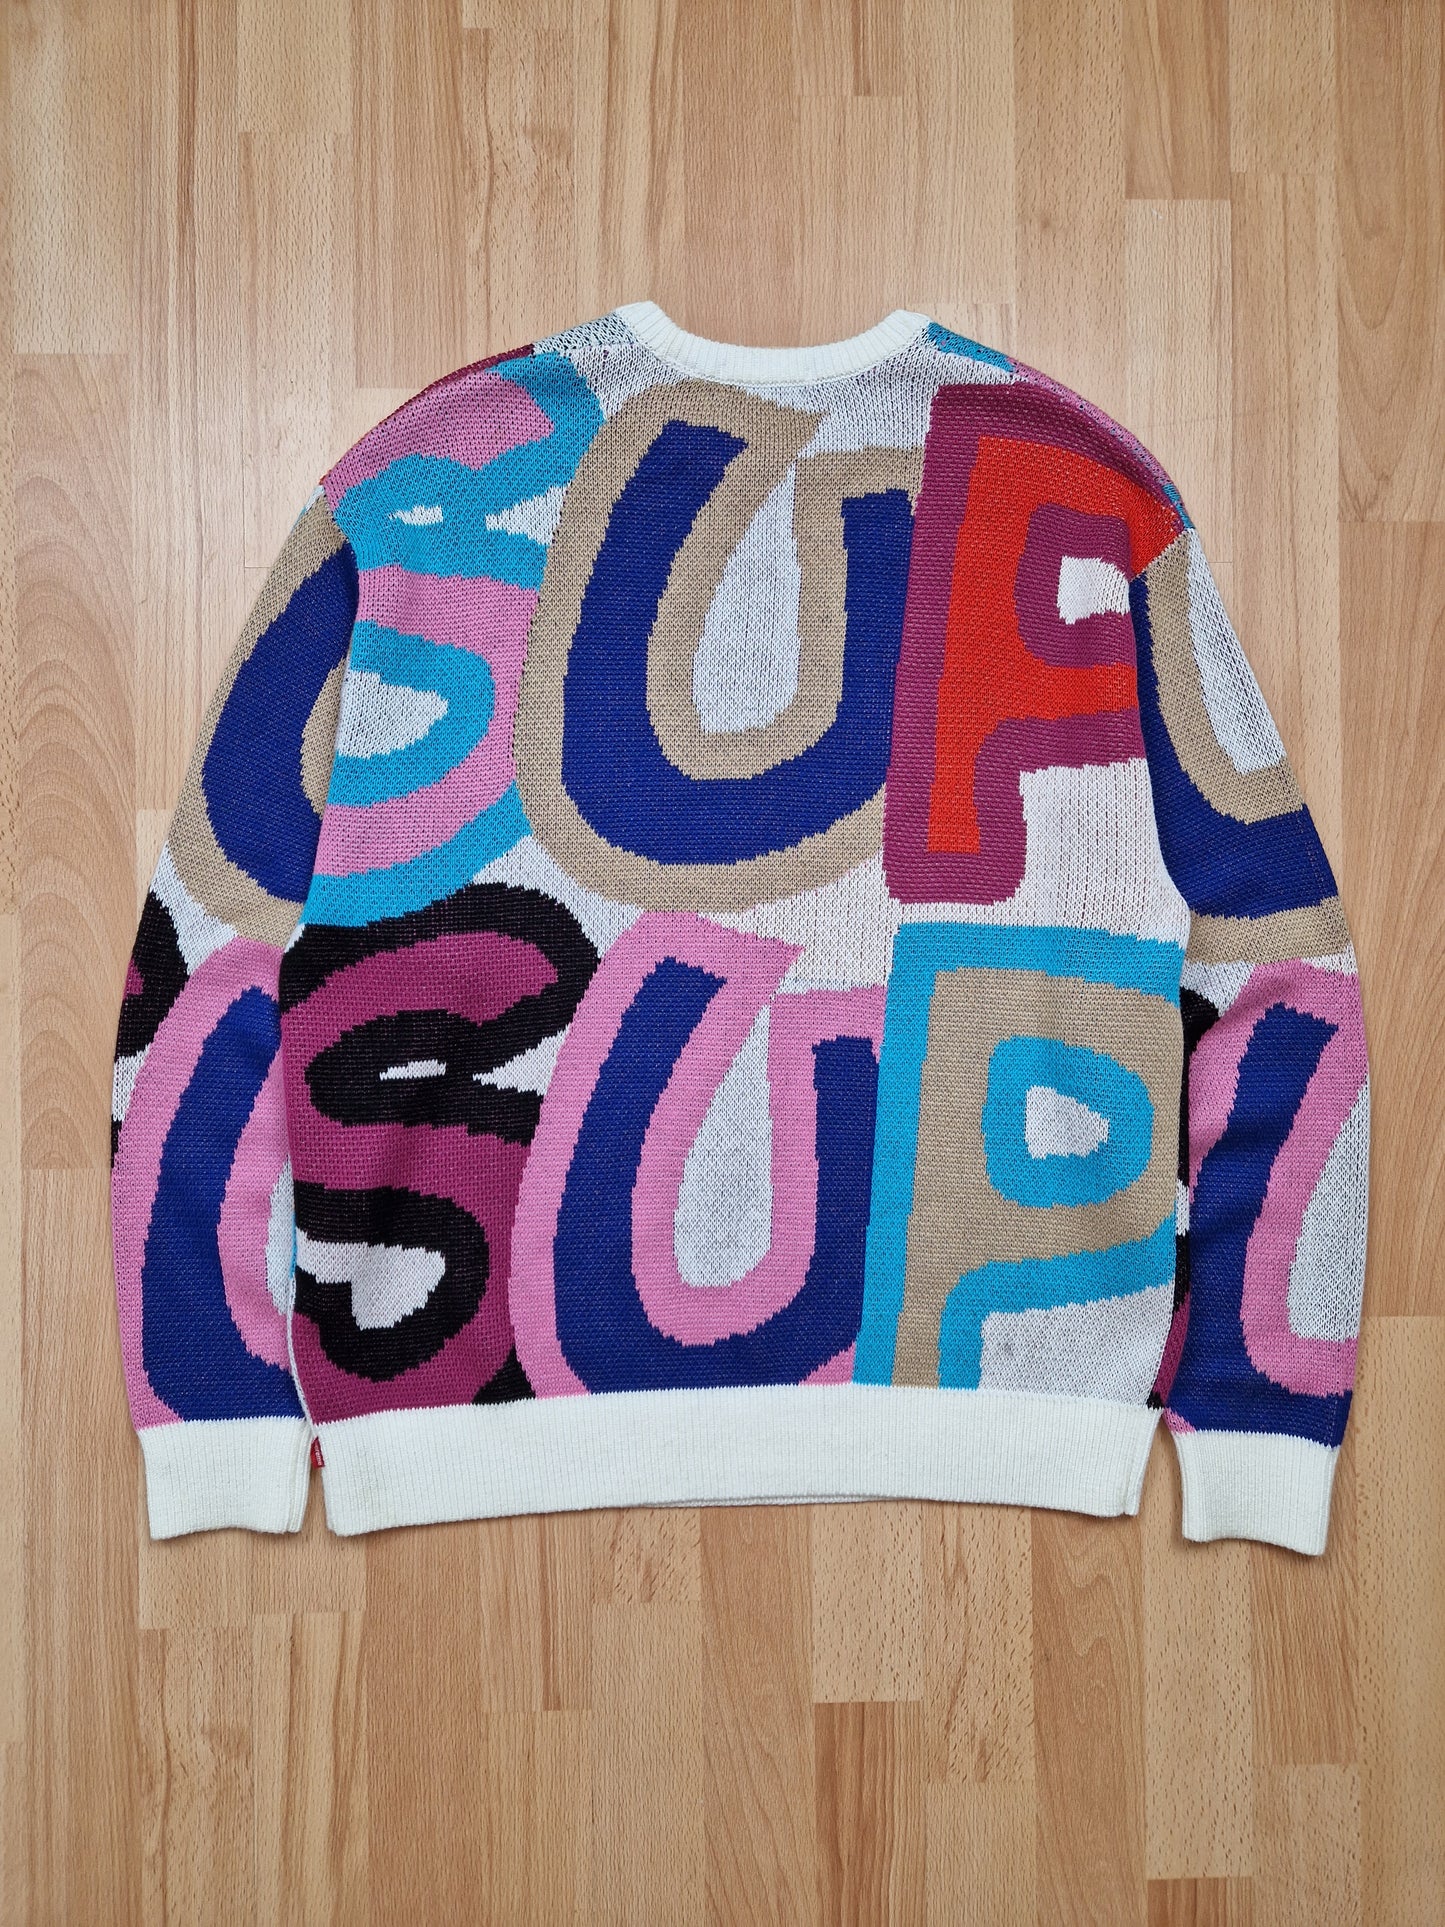 Rare Supreme x Smurfs Knit Sweater (M)